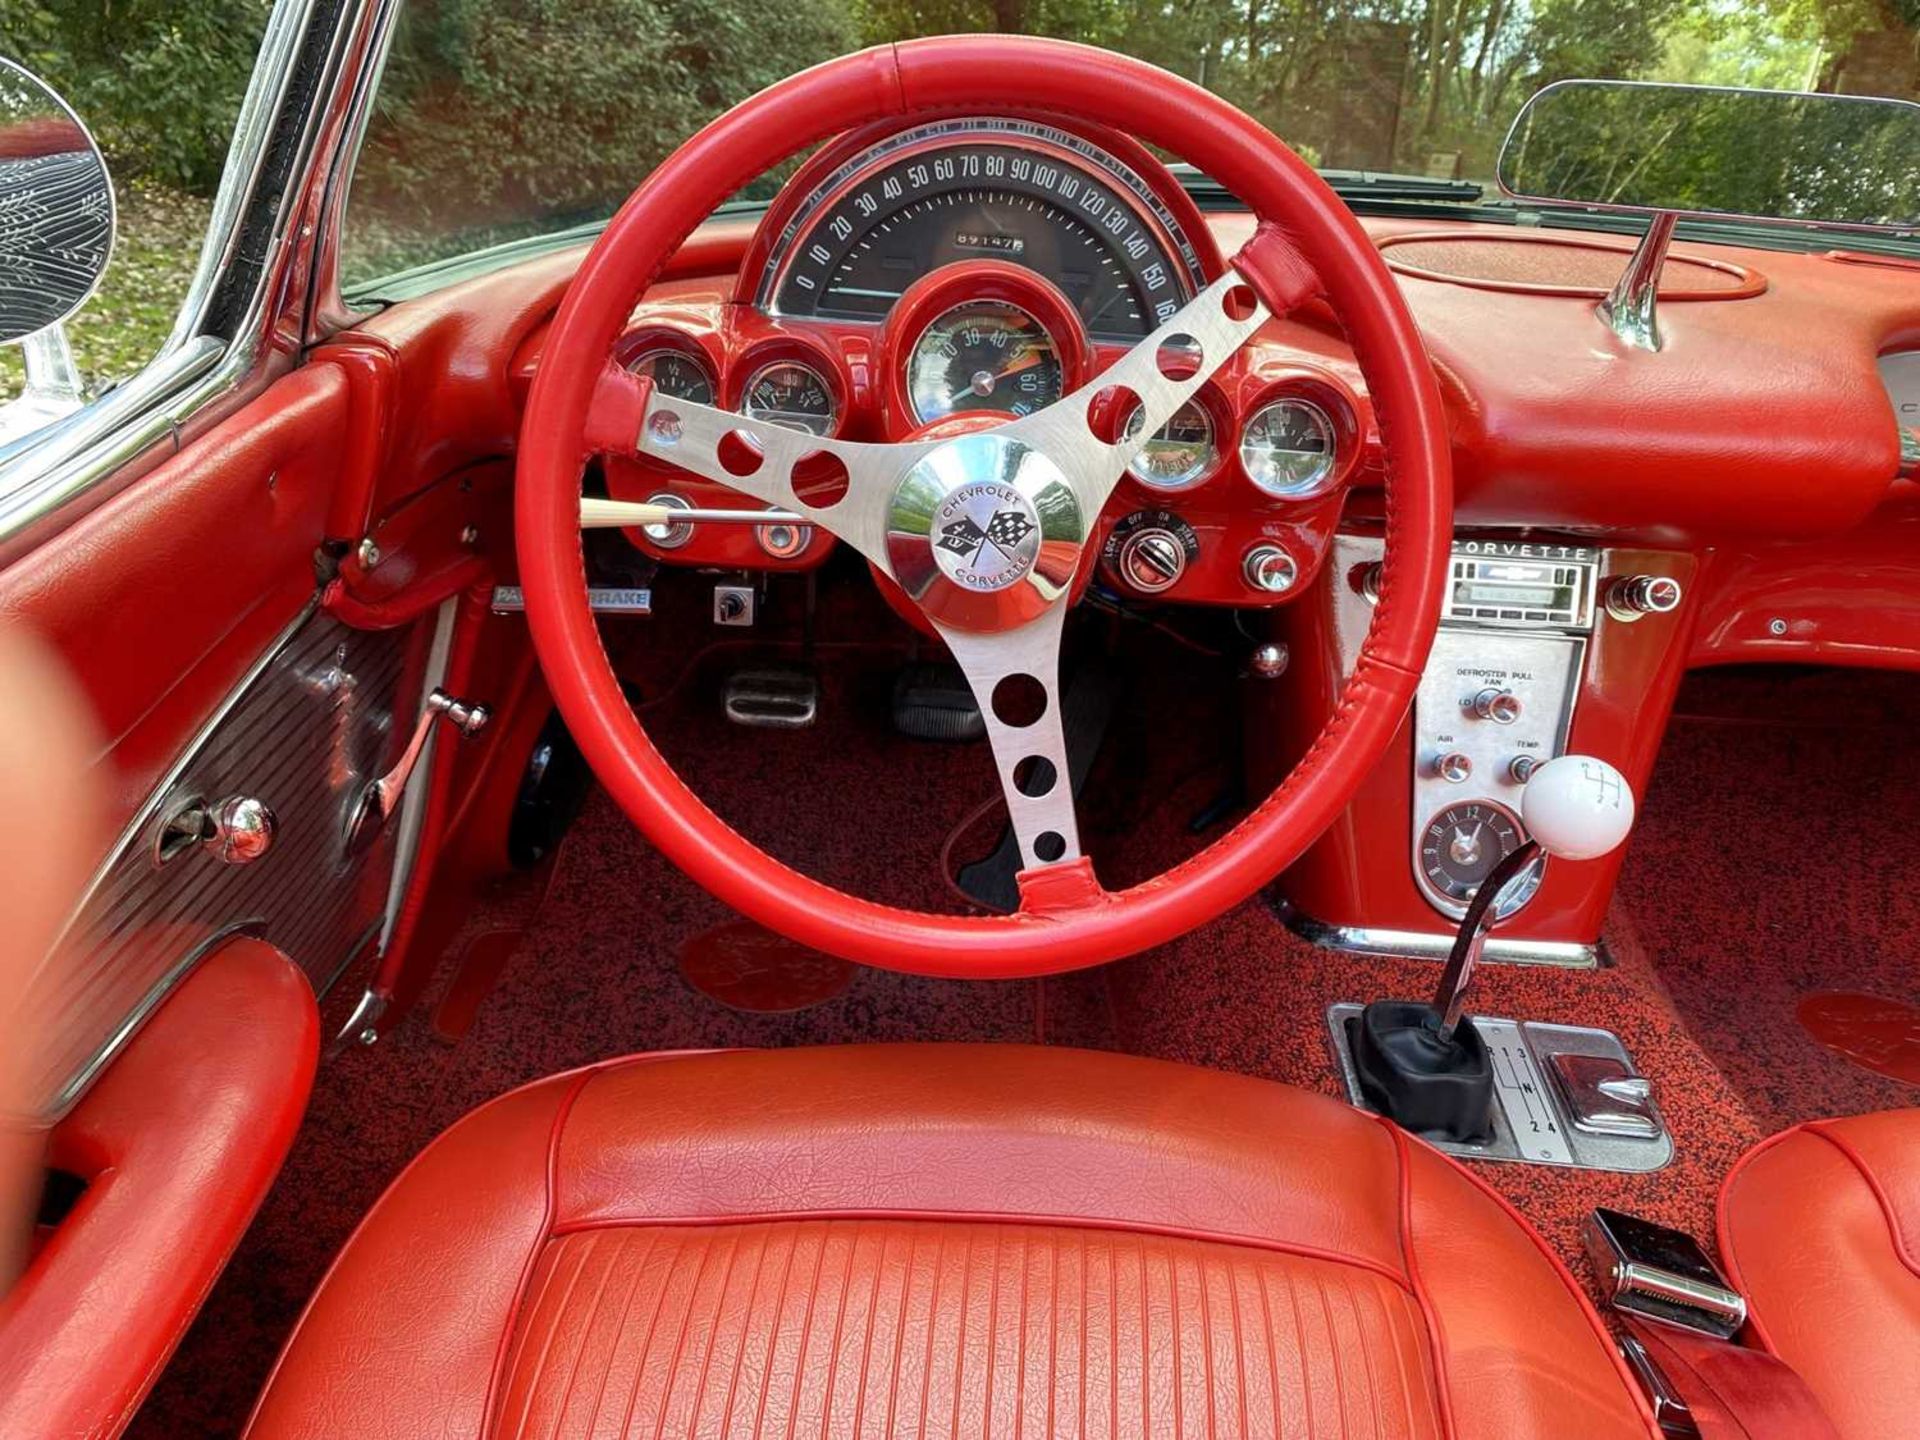 1961 Chevrolet Corvette Engine upgraded to a 5.4L V8 - Image 66 of 95